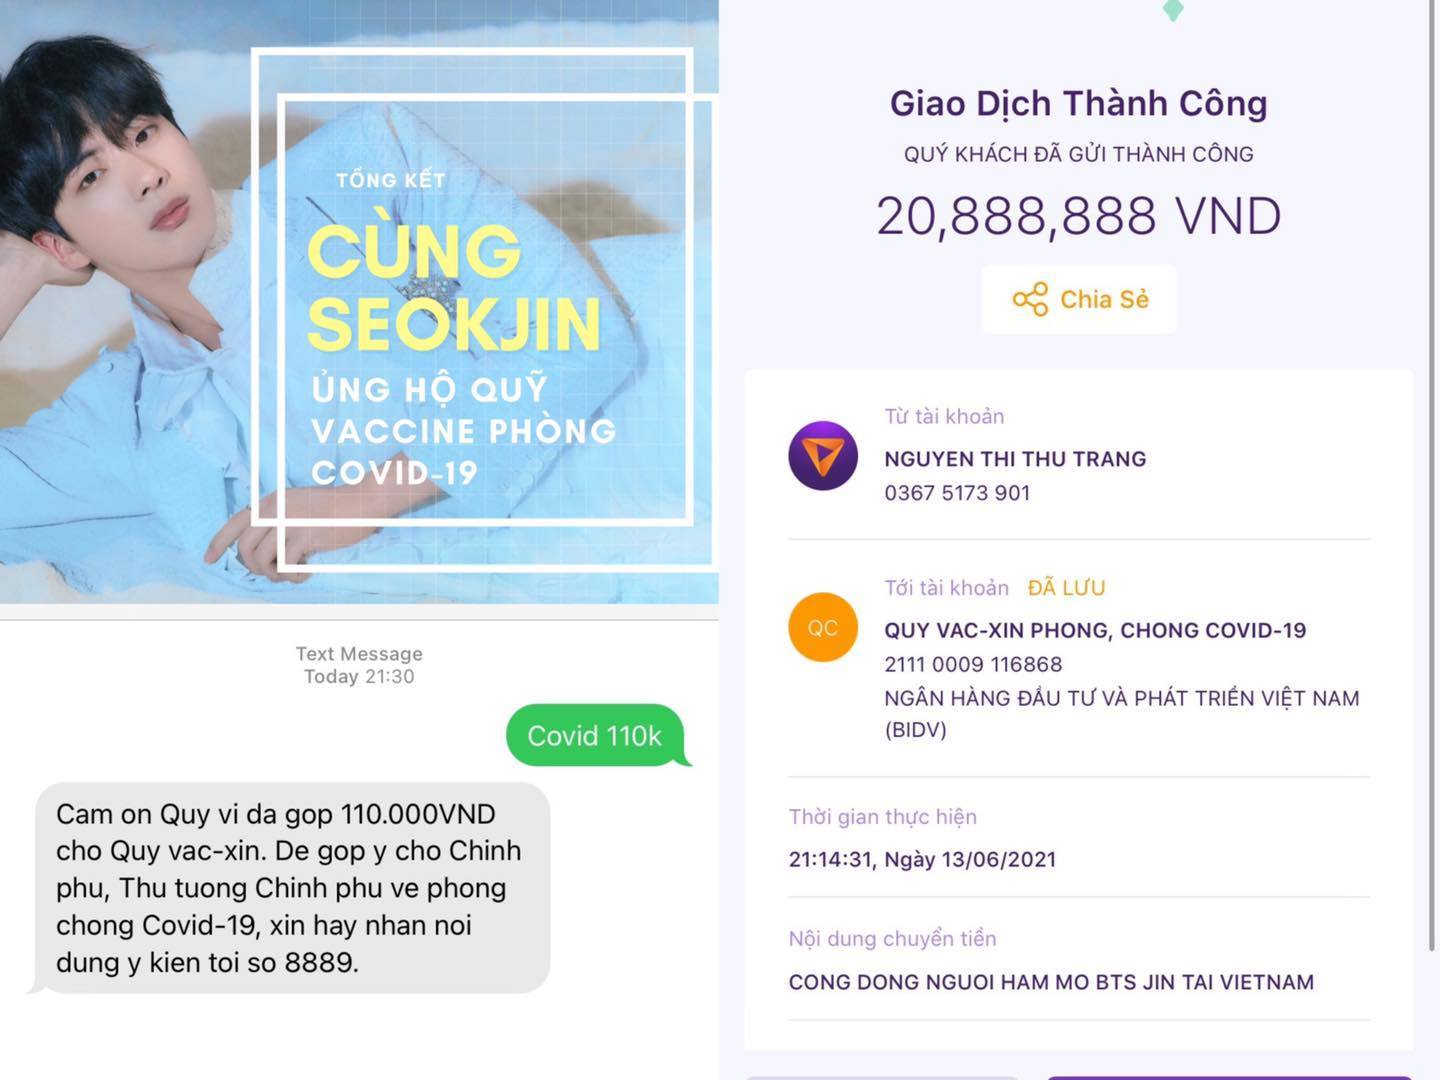 Jinah kêu gọi ủng hộ được 20.999.882 VNĐ (Ảnh: Jinah - BTS Jin's Vietnamese Fanpage)